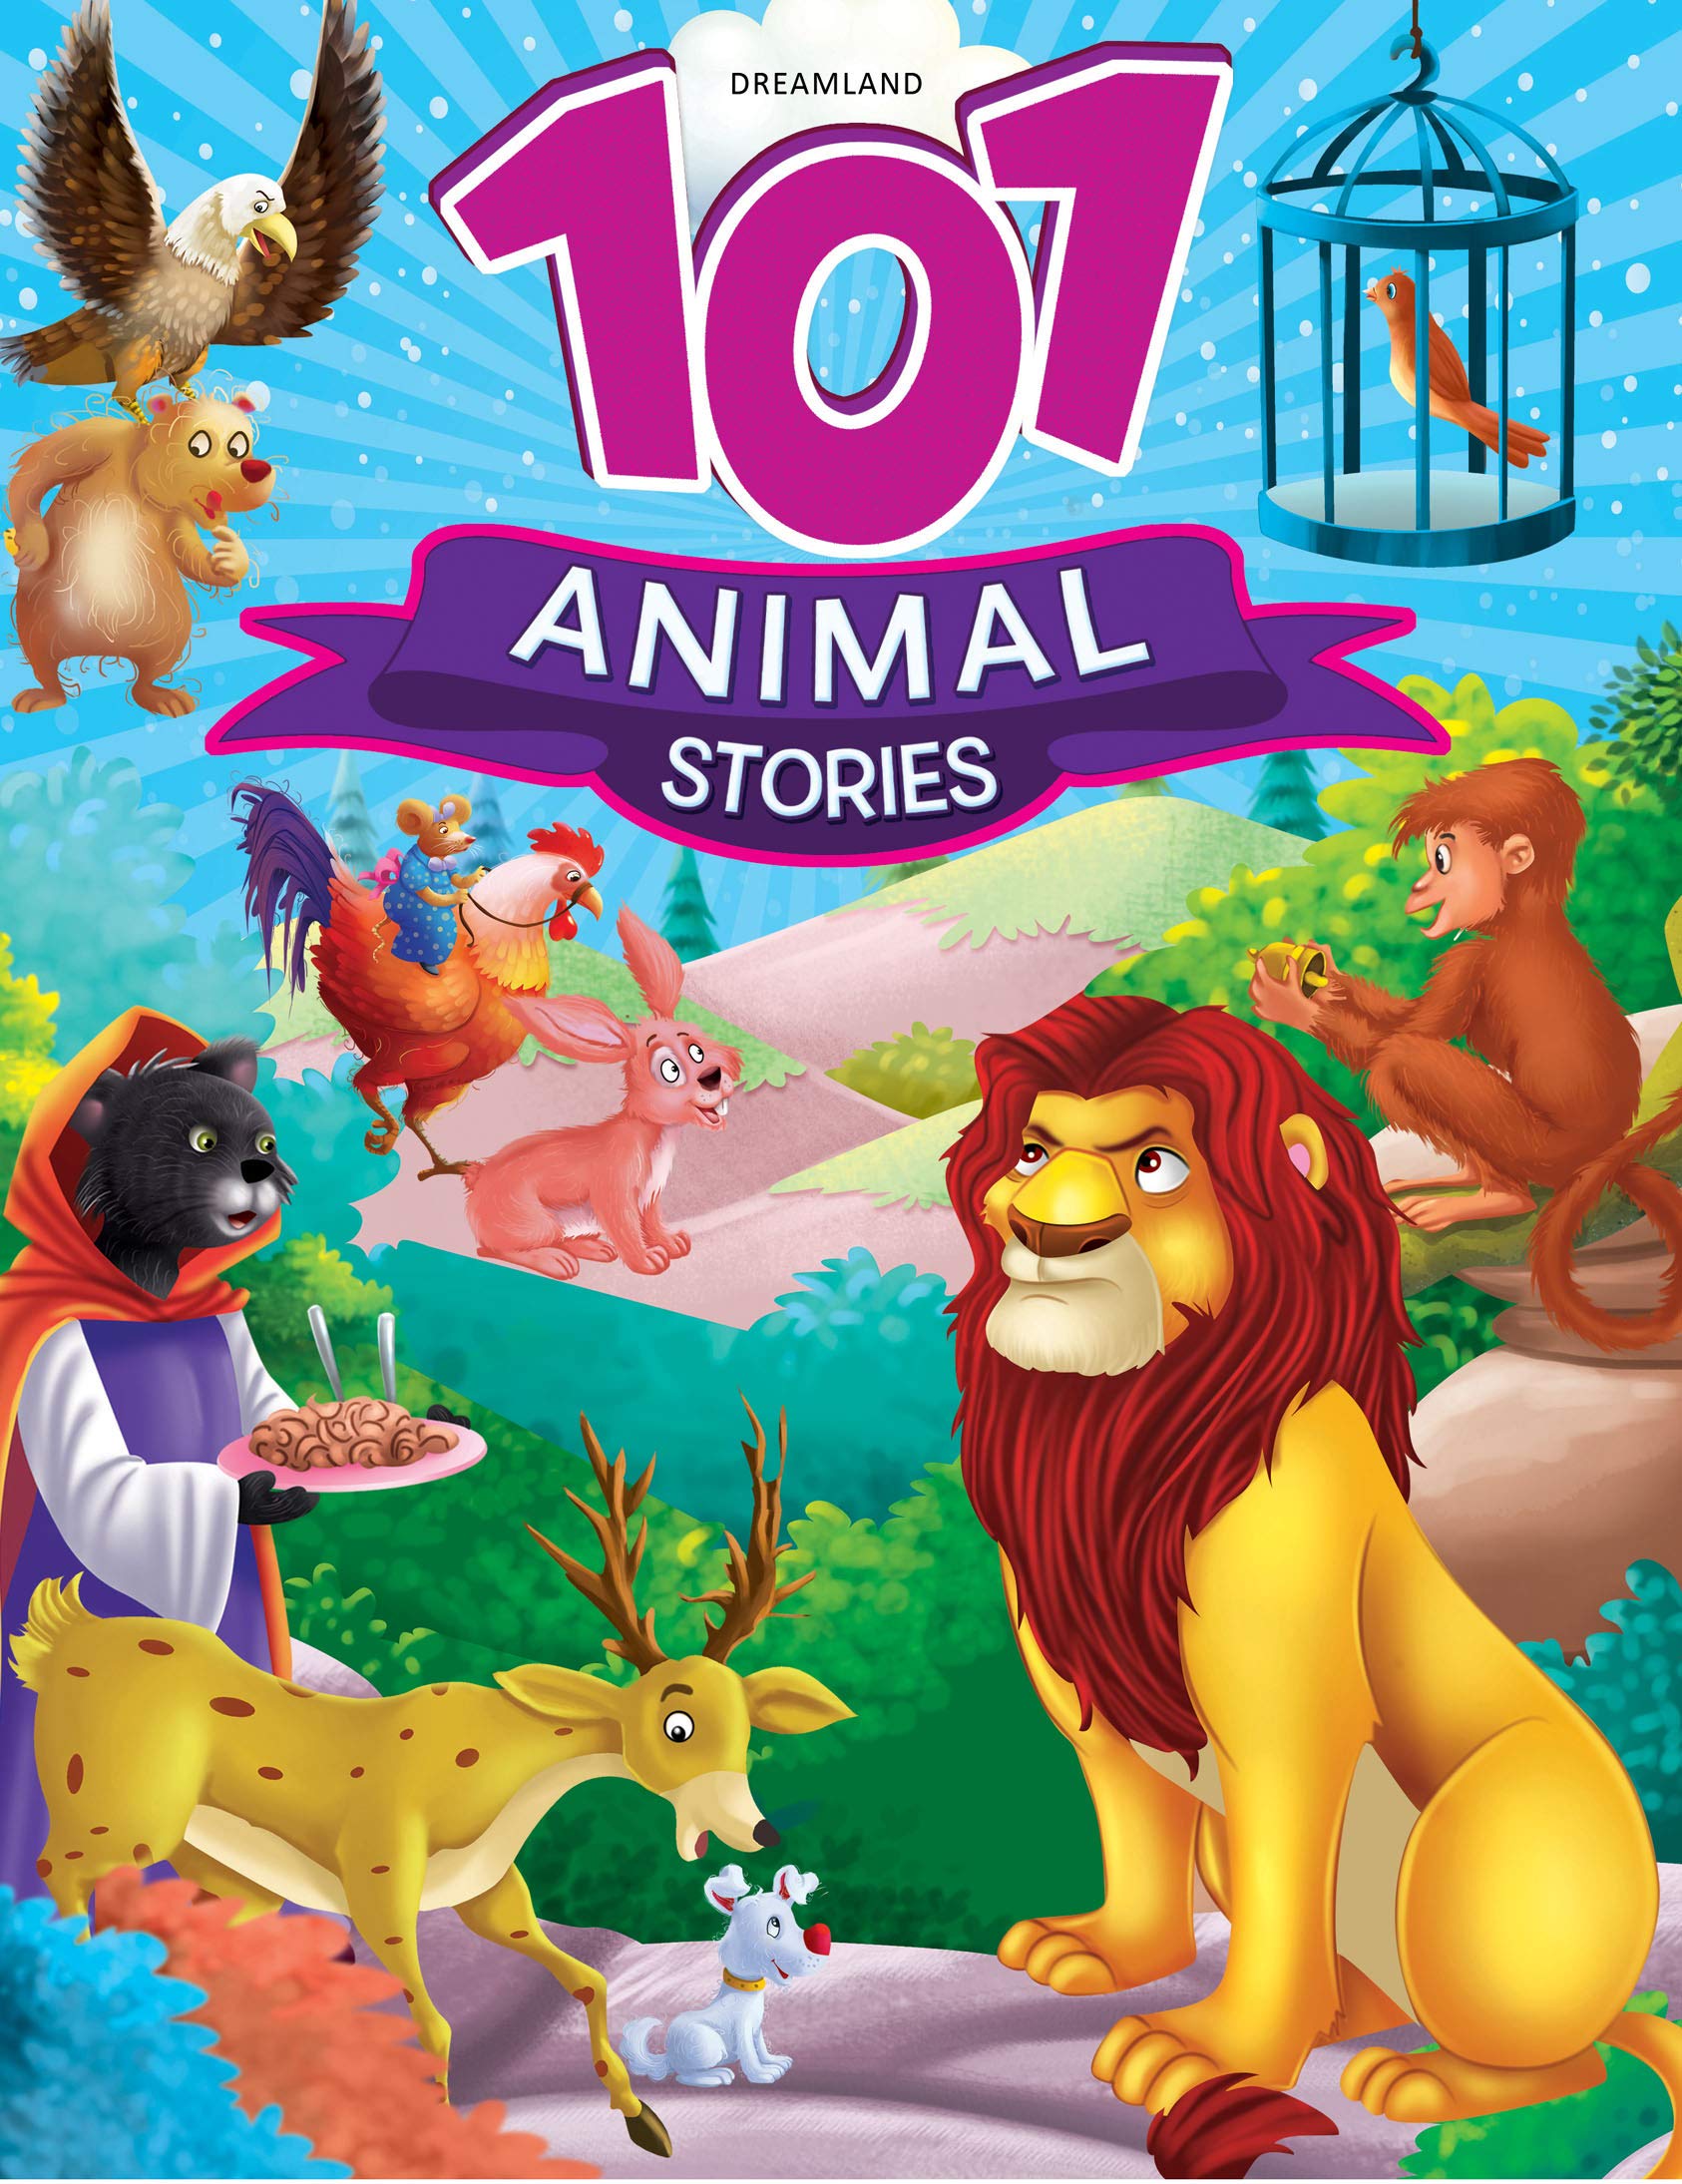 101 Animals Stories